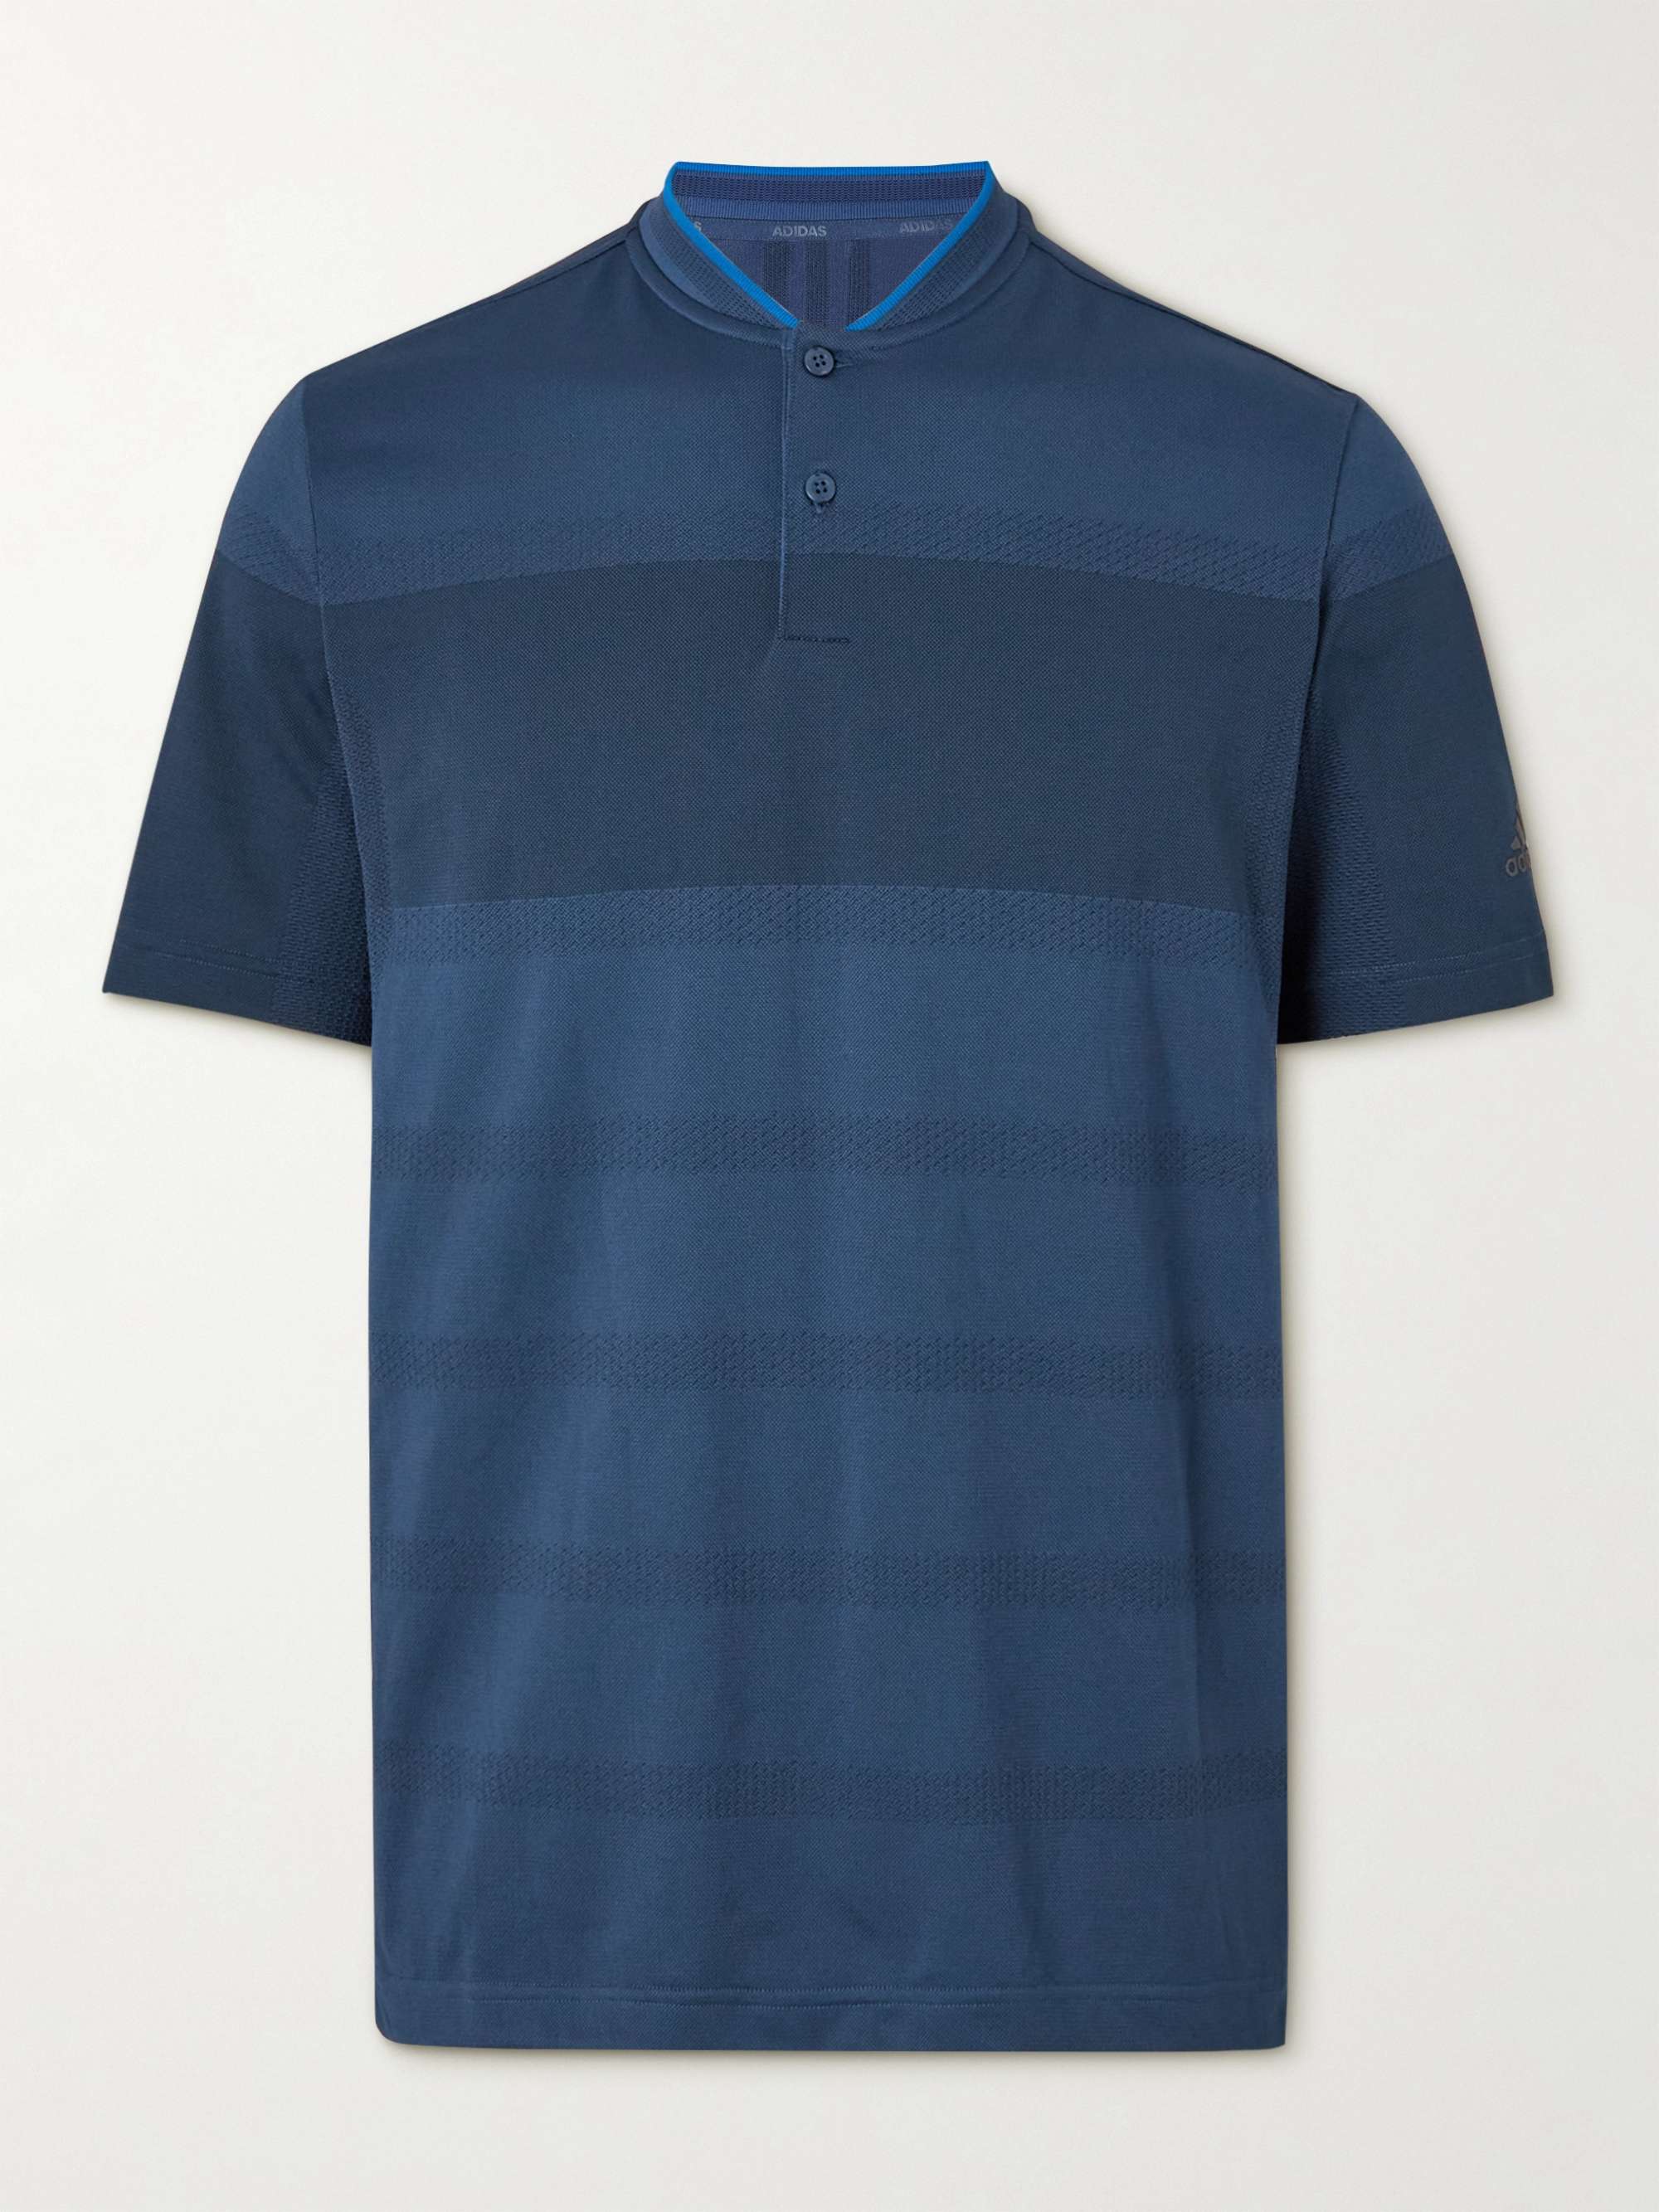 ADIDAS GOLF Statement Striped Recycled Primeknit Golf Polo Shirt